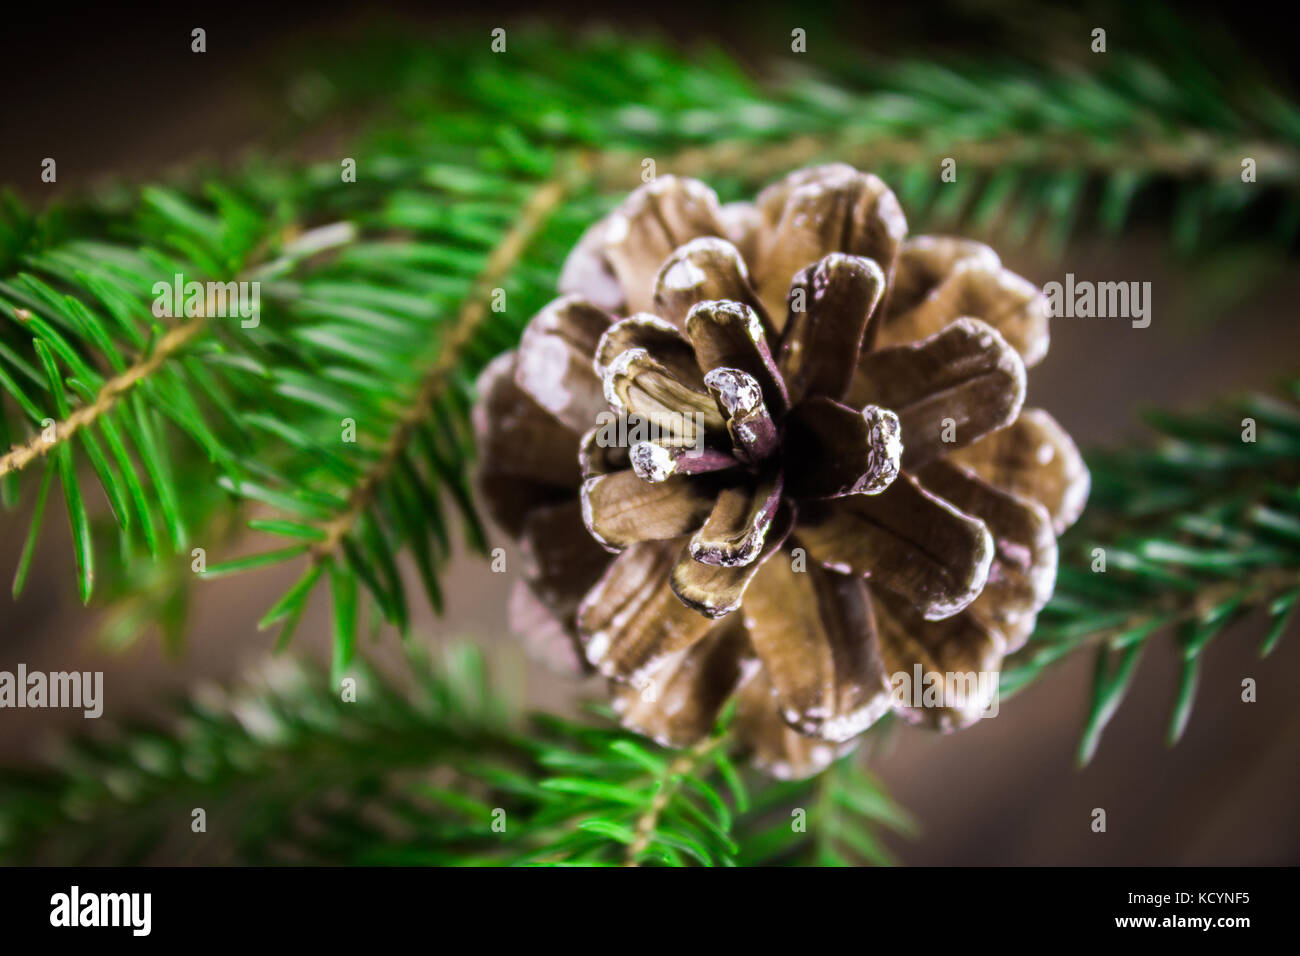 bump on the Christmas tree branch Stock Photo - Alamy